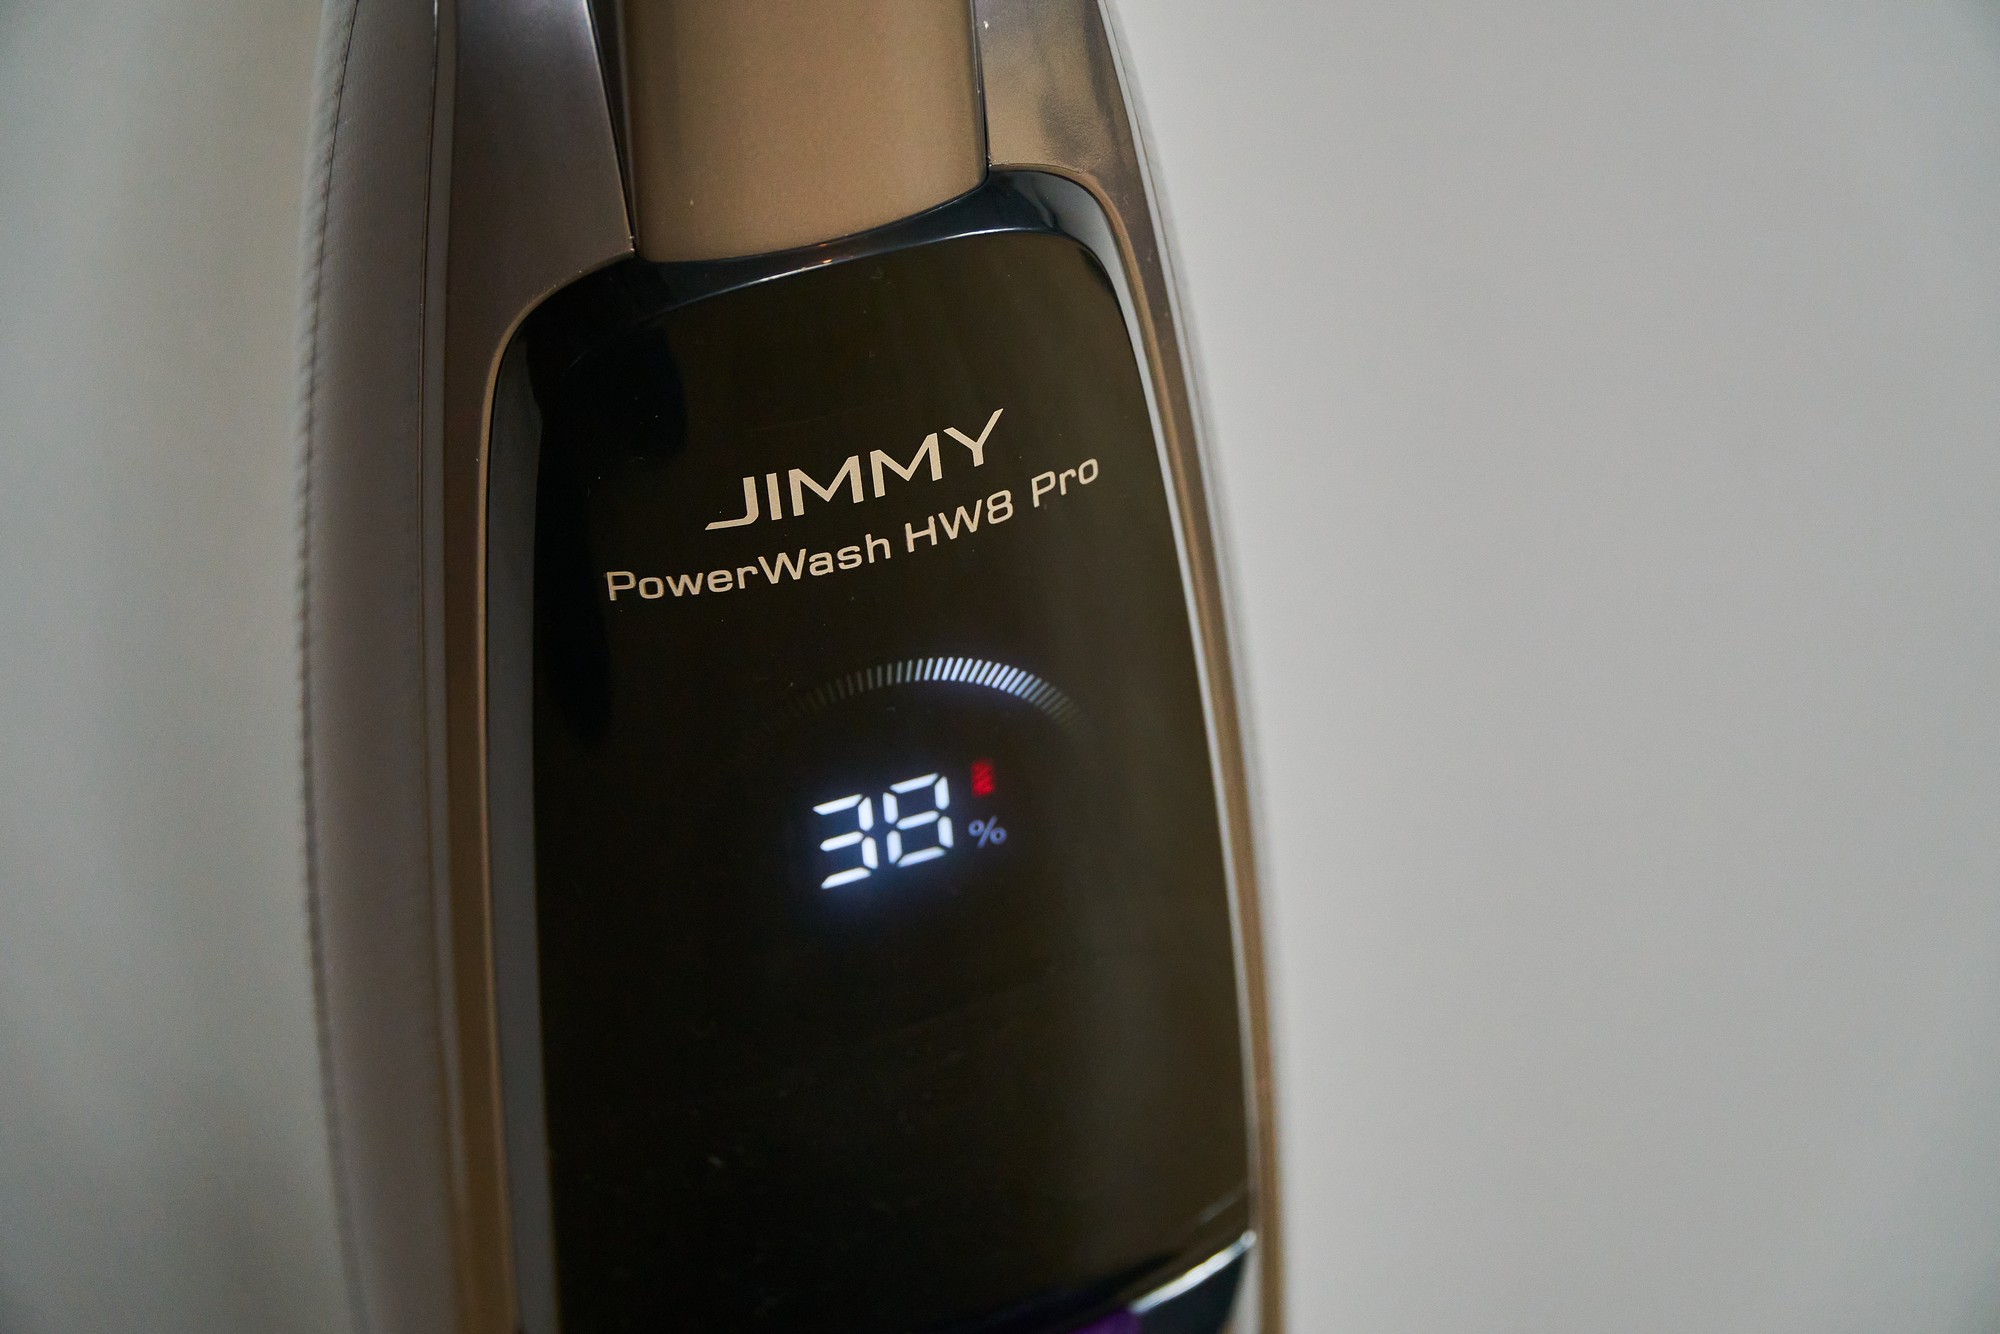  JIMMY PowerWash HW8 Pro